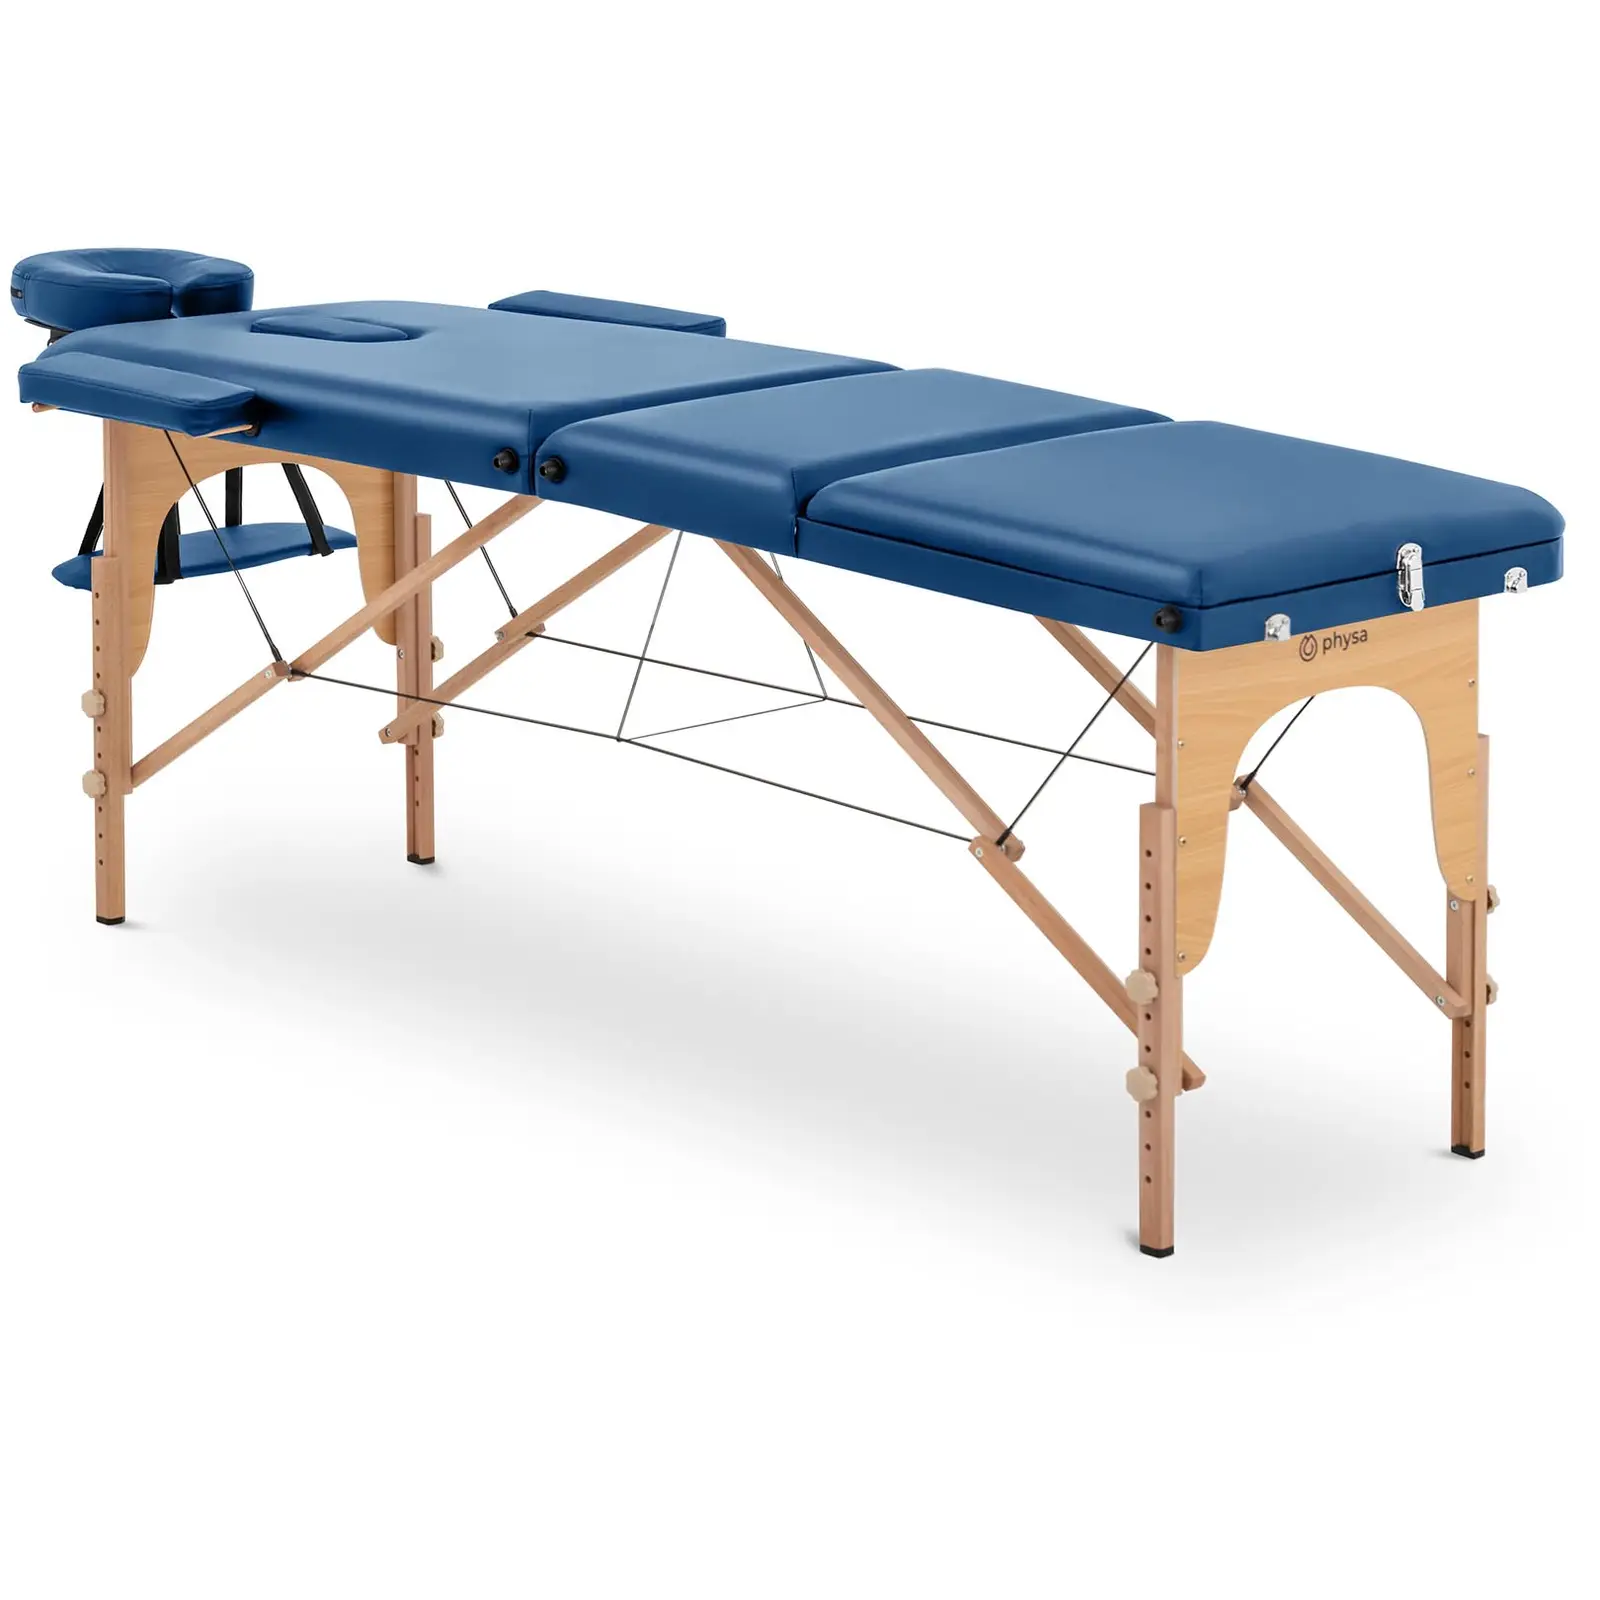 Blandet svindler Ambassadør table de massage pliante - 185 x 60 x 60-85 cm - 227 kg - Bleu |  www.expondo.fr